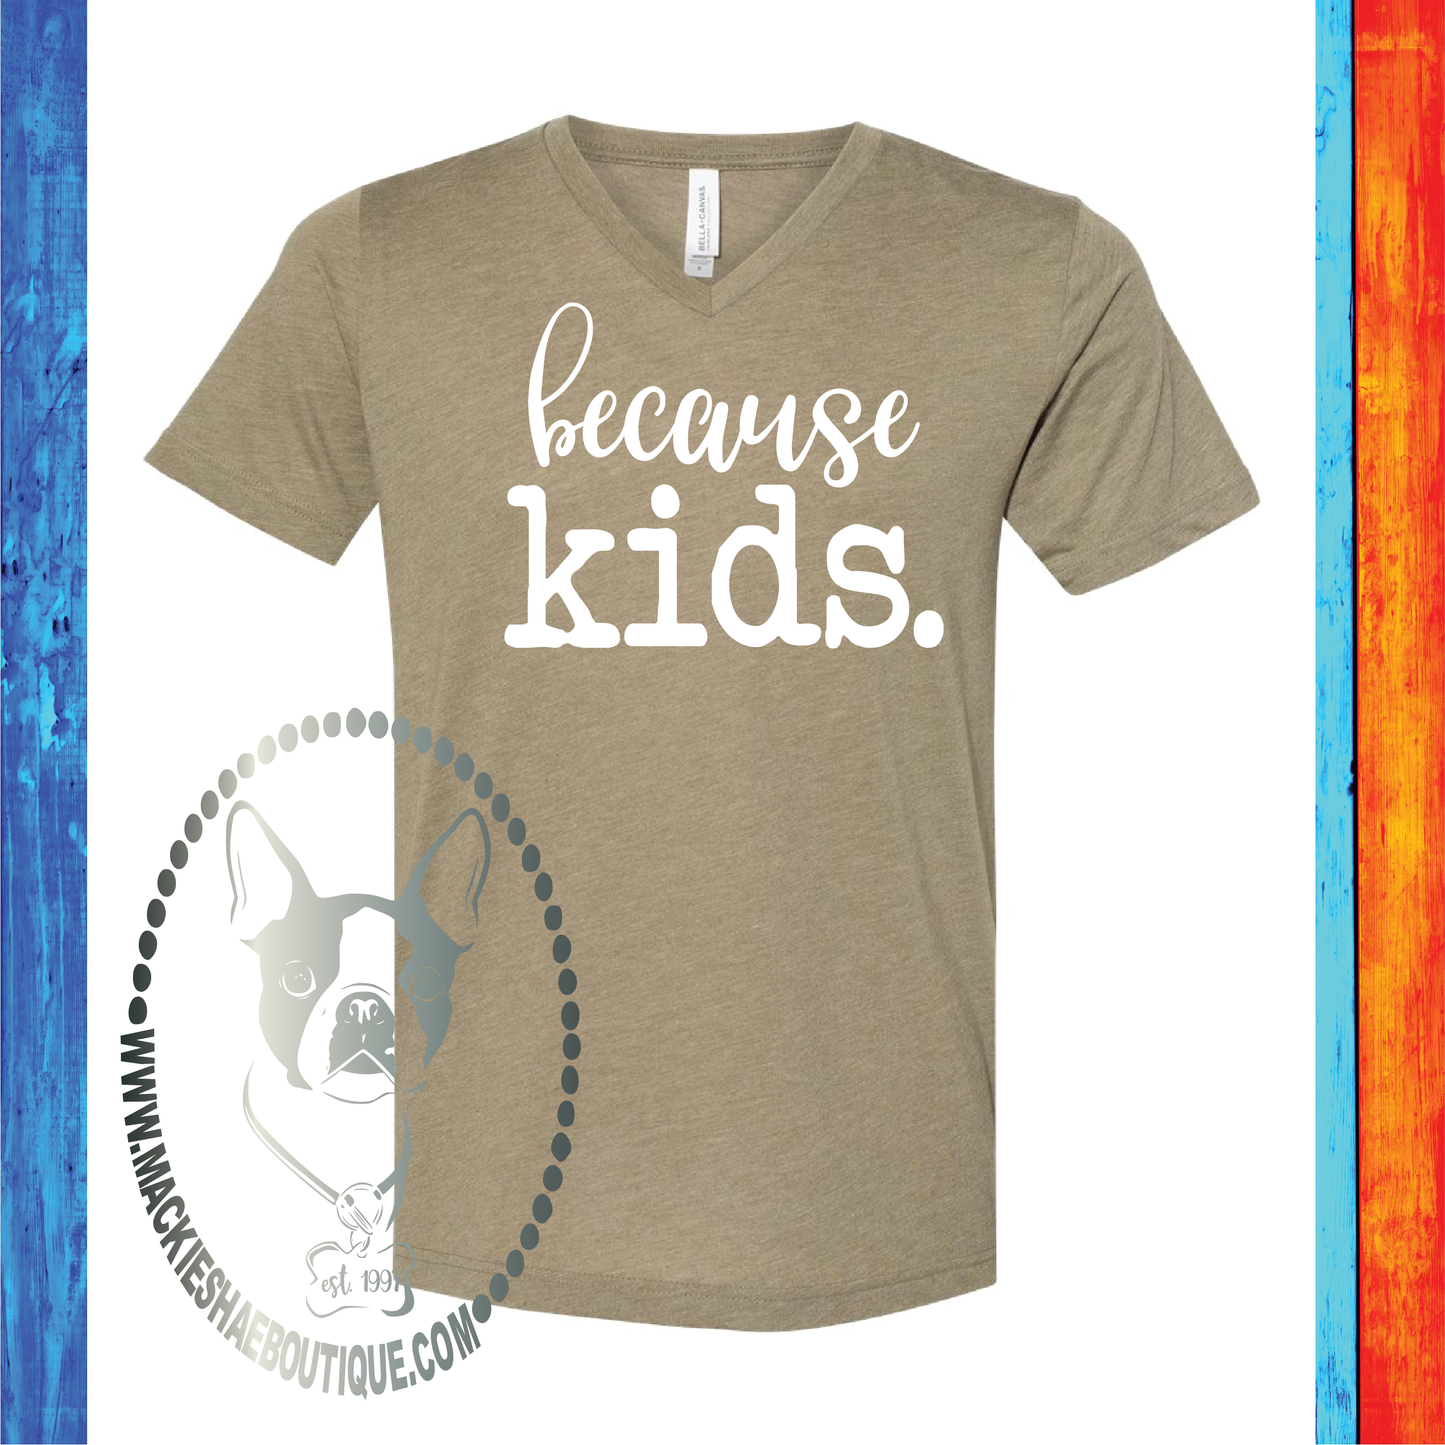 Because Kids. Custom Shirt, Short Sleeve Soft Tee